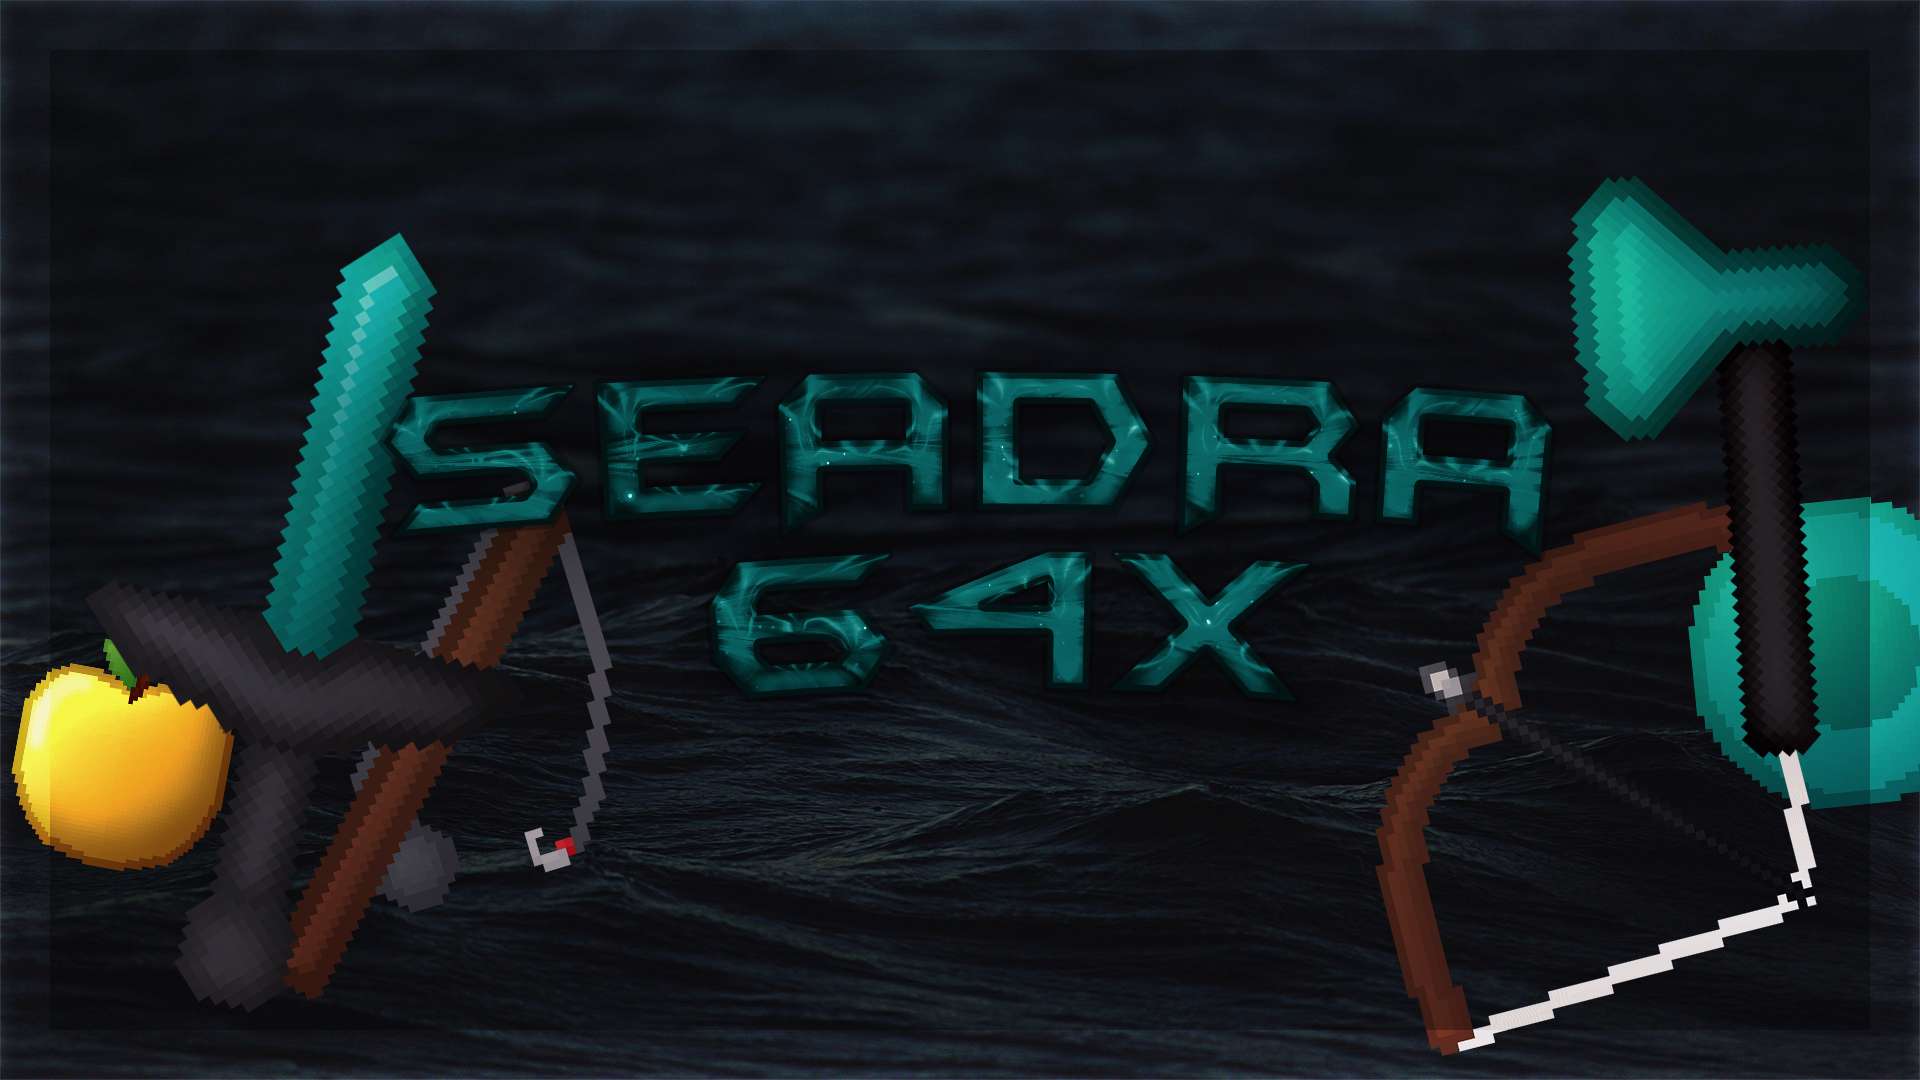 Seadra 64x by grzybek__ on PvPRP